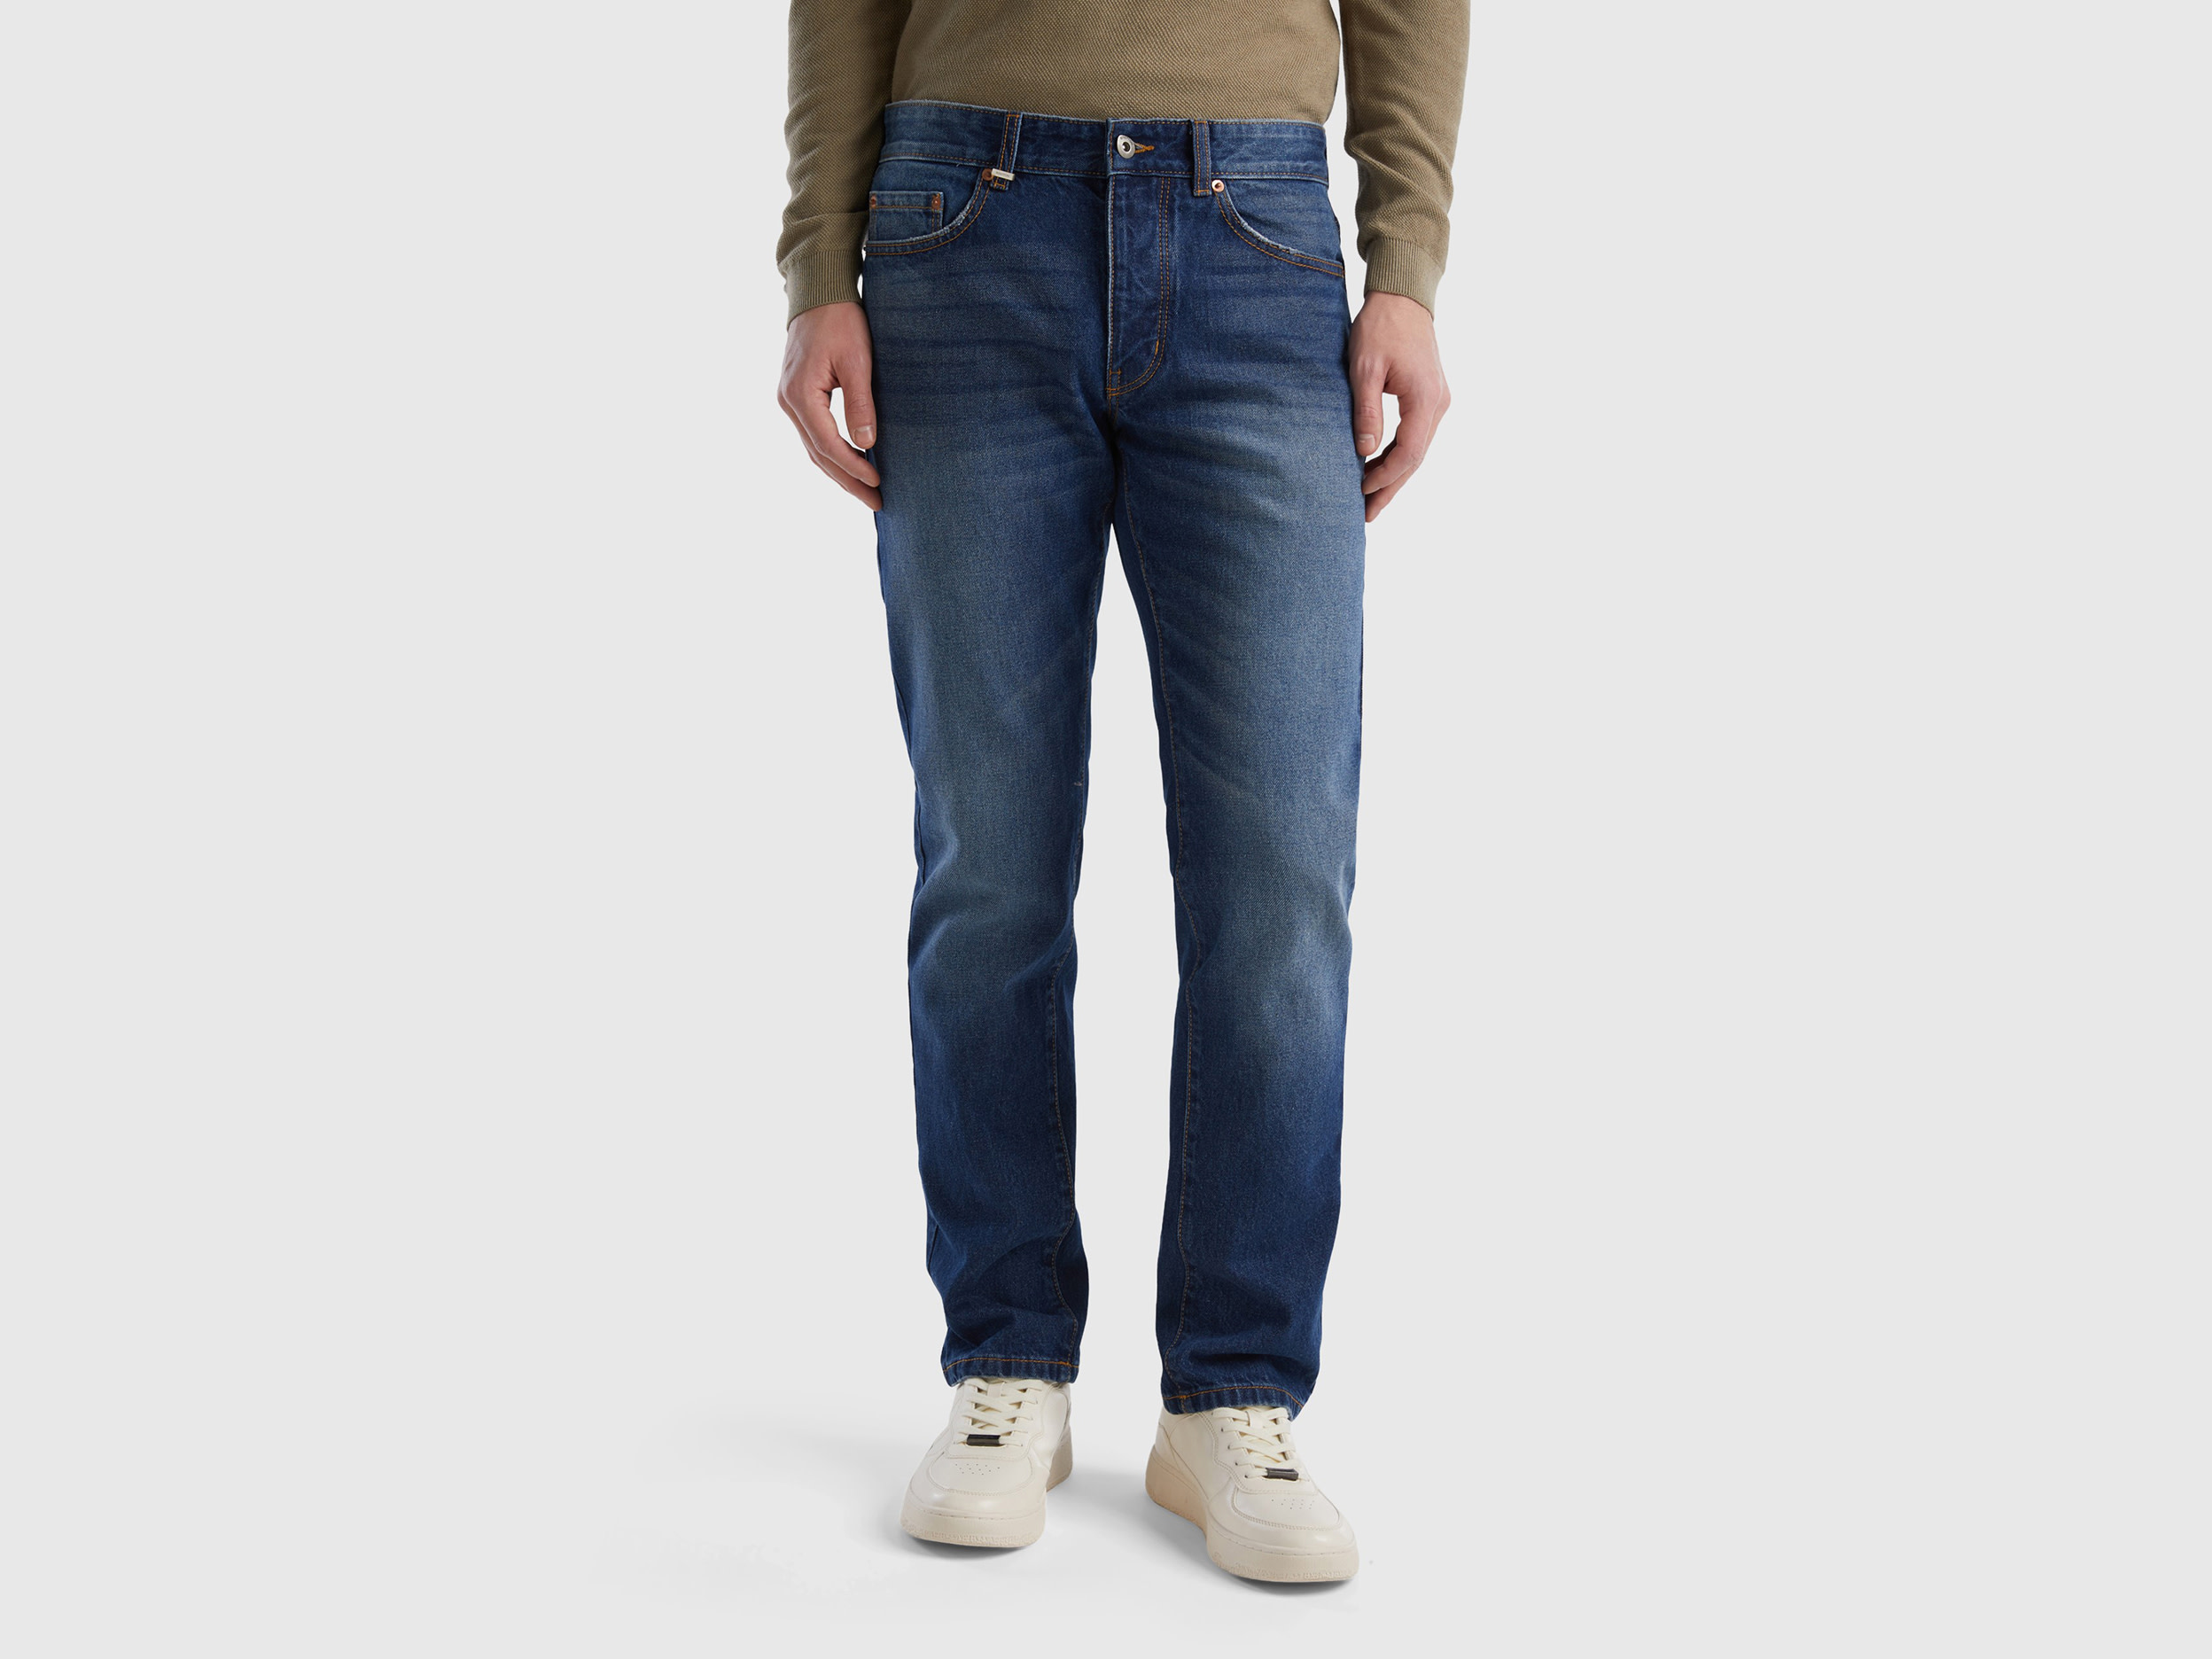 Benetton, Straight Fit Jeans, size 33, Dark Blue, Men